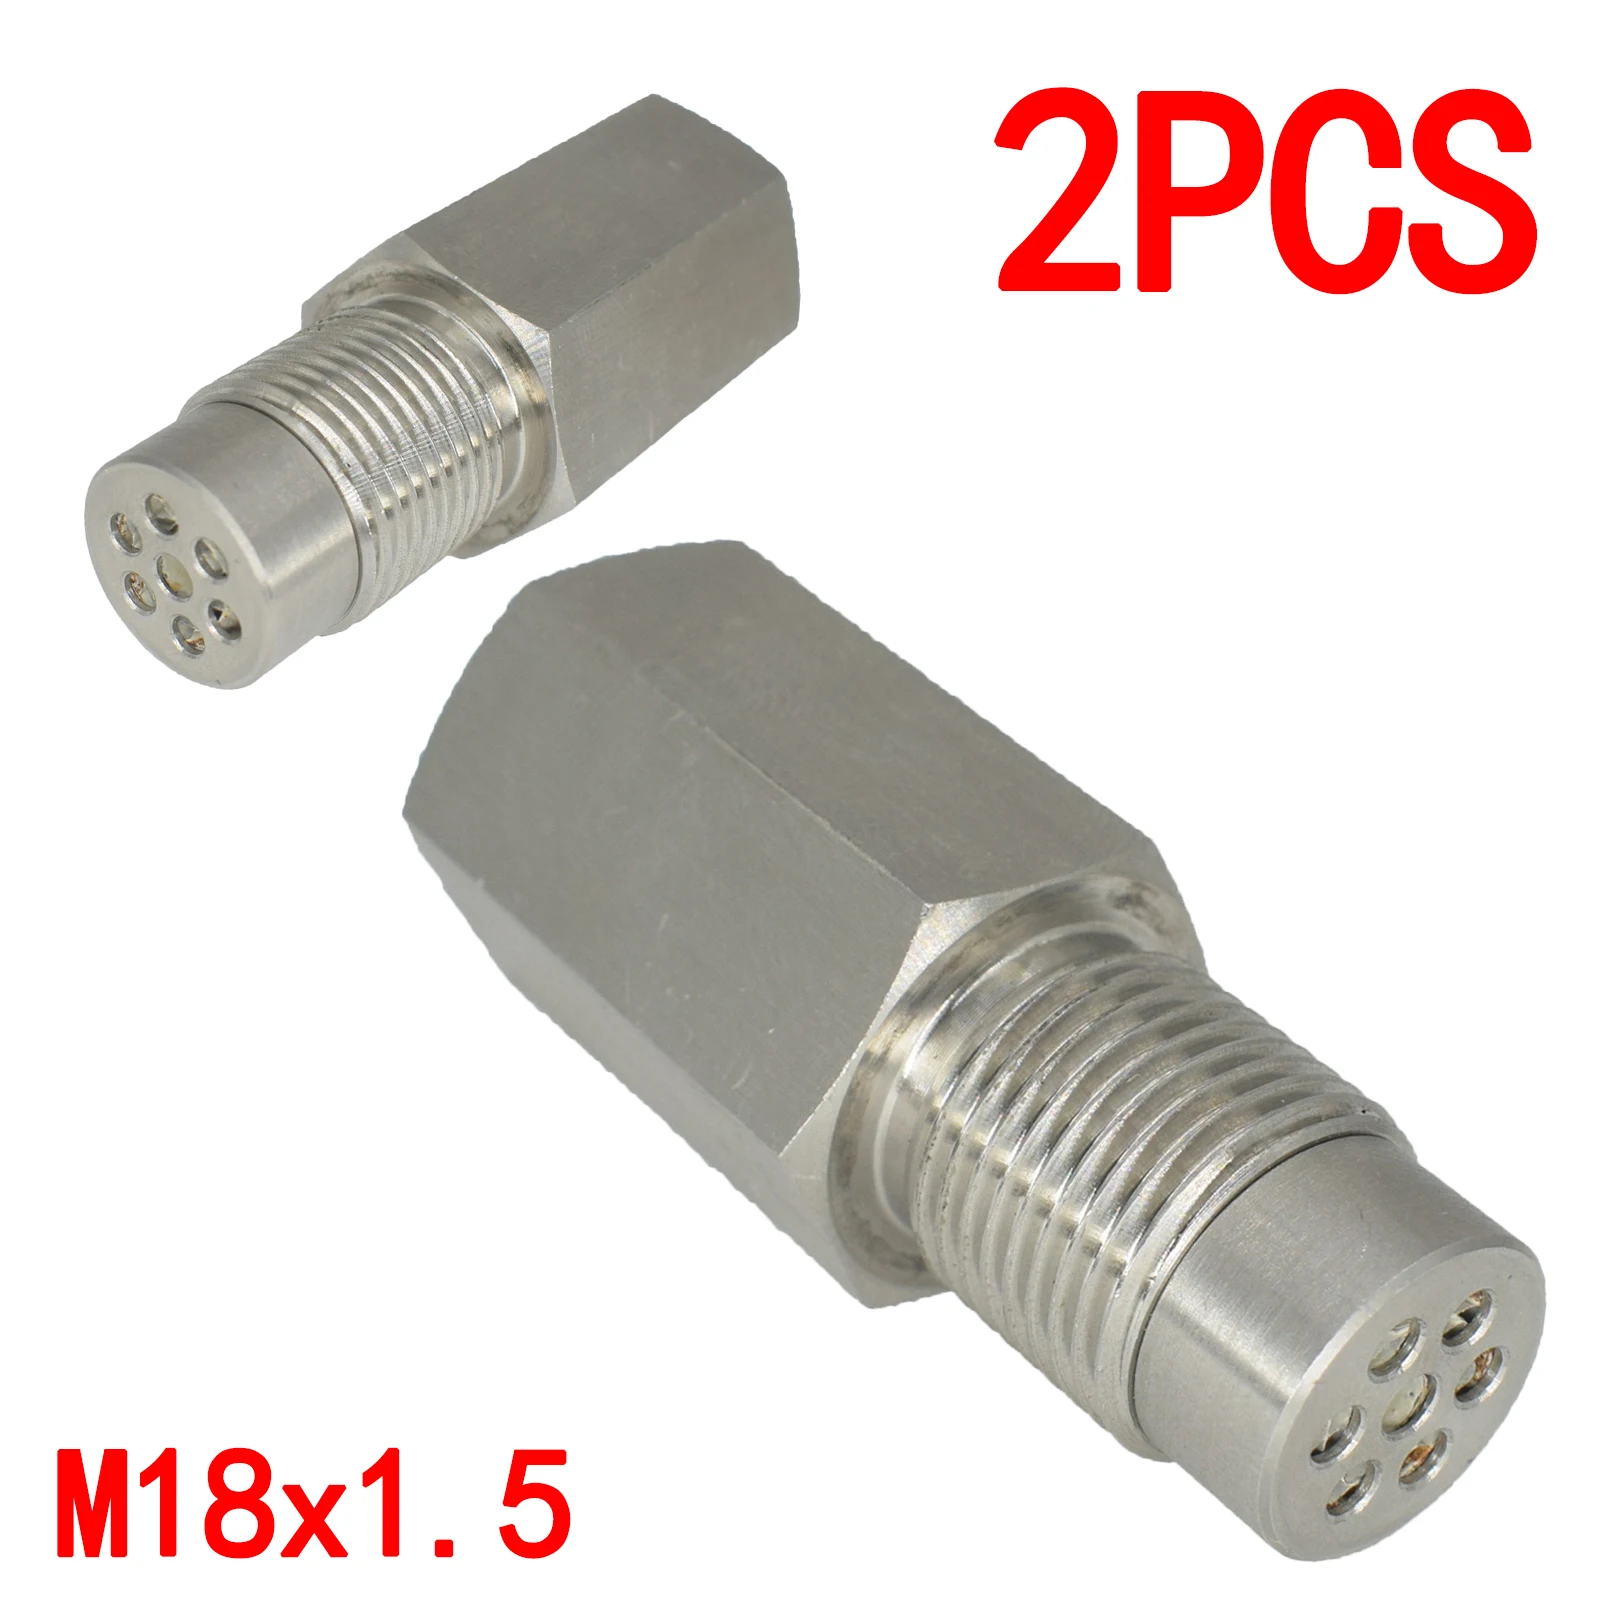 2PCS Universal O2 Oxygen Sensor Extender Spacer Adapter Bung Catalytic Converter Fix Check CEL Eliminator Engine Light M18X1.5